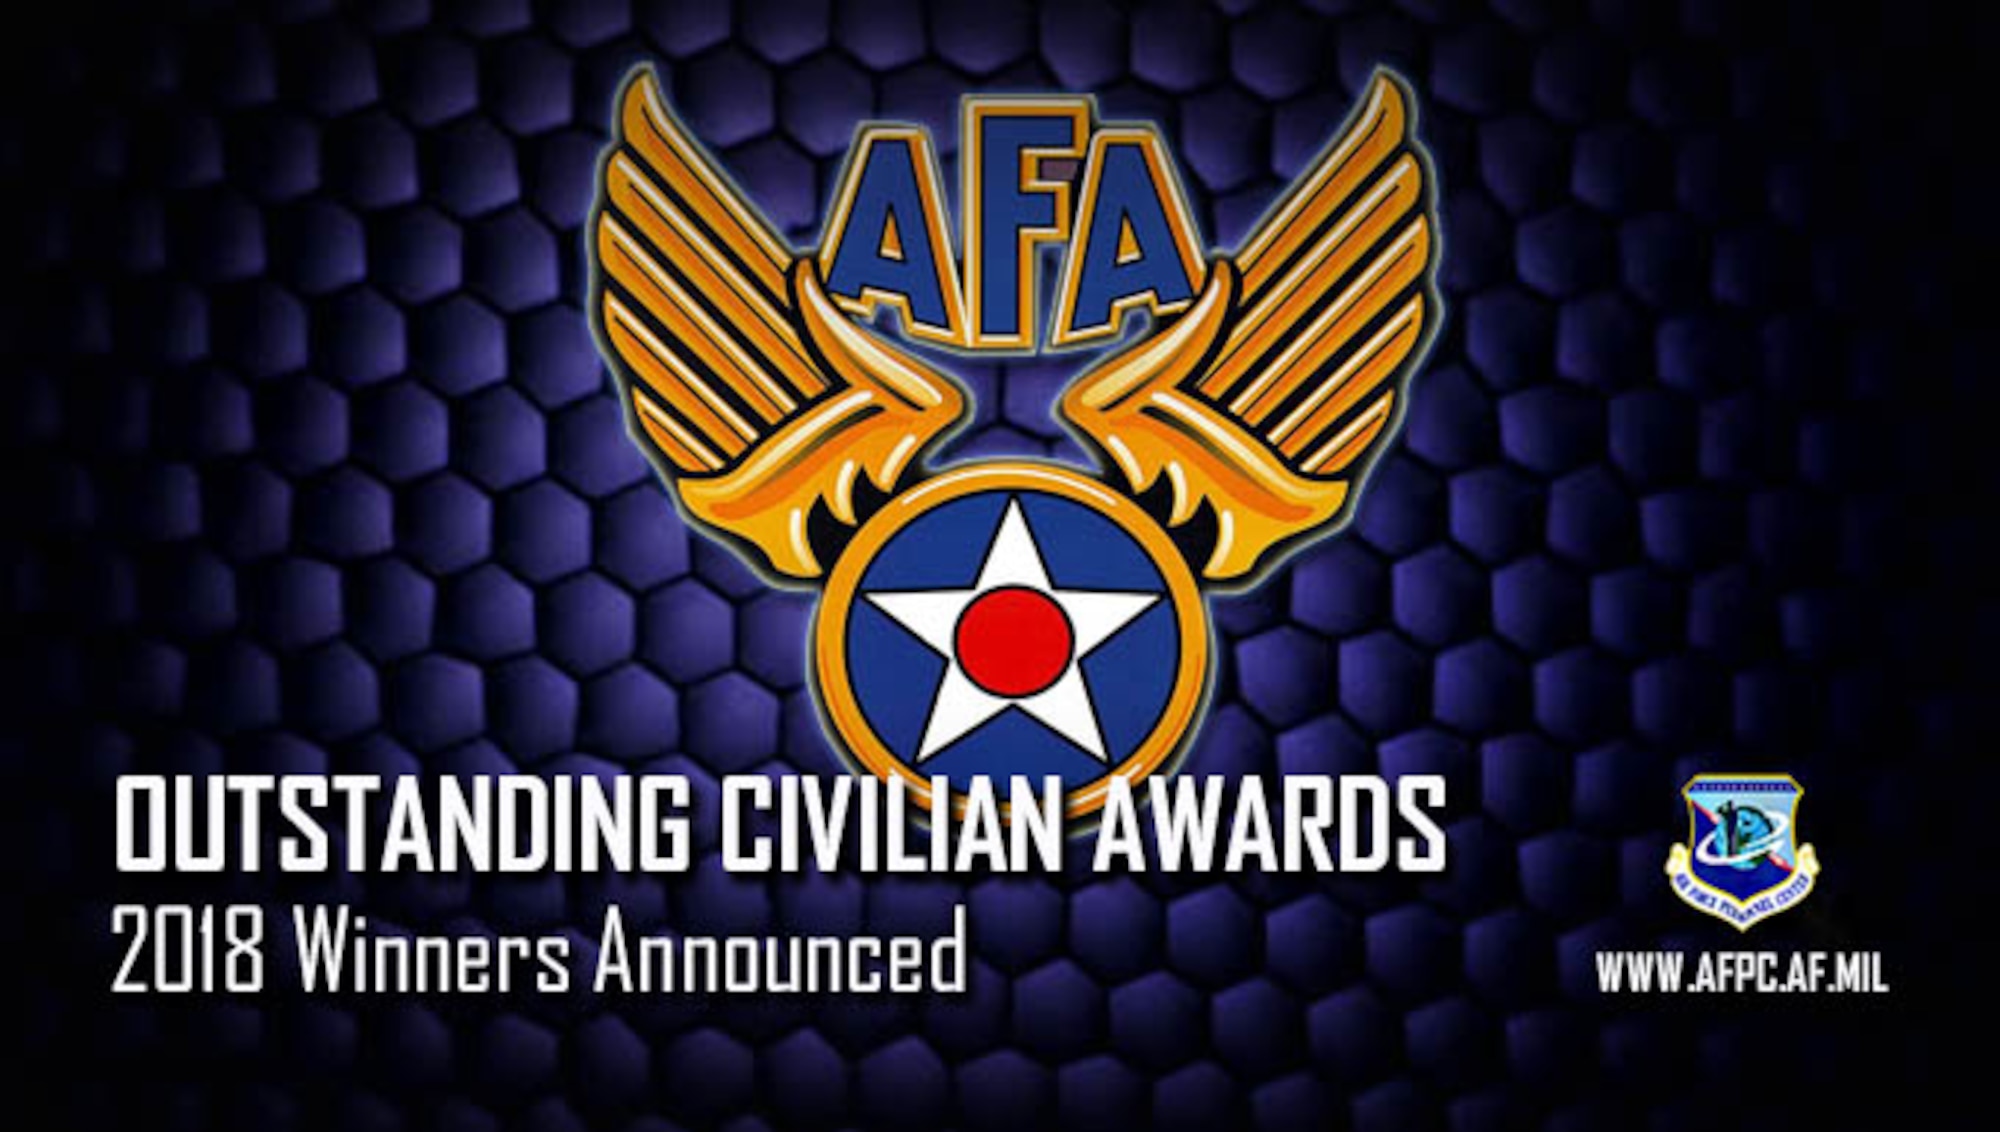 Outstanding civilian awards; 2018 winners announced